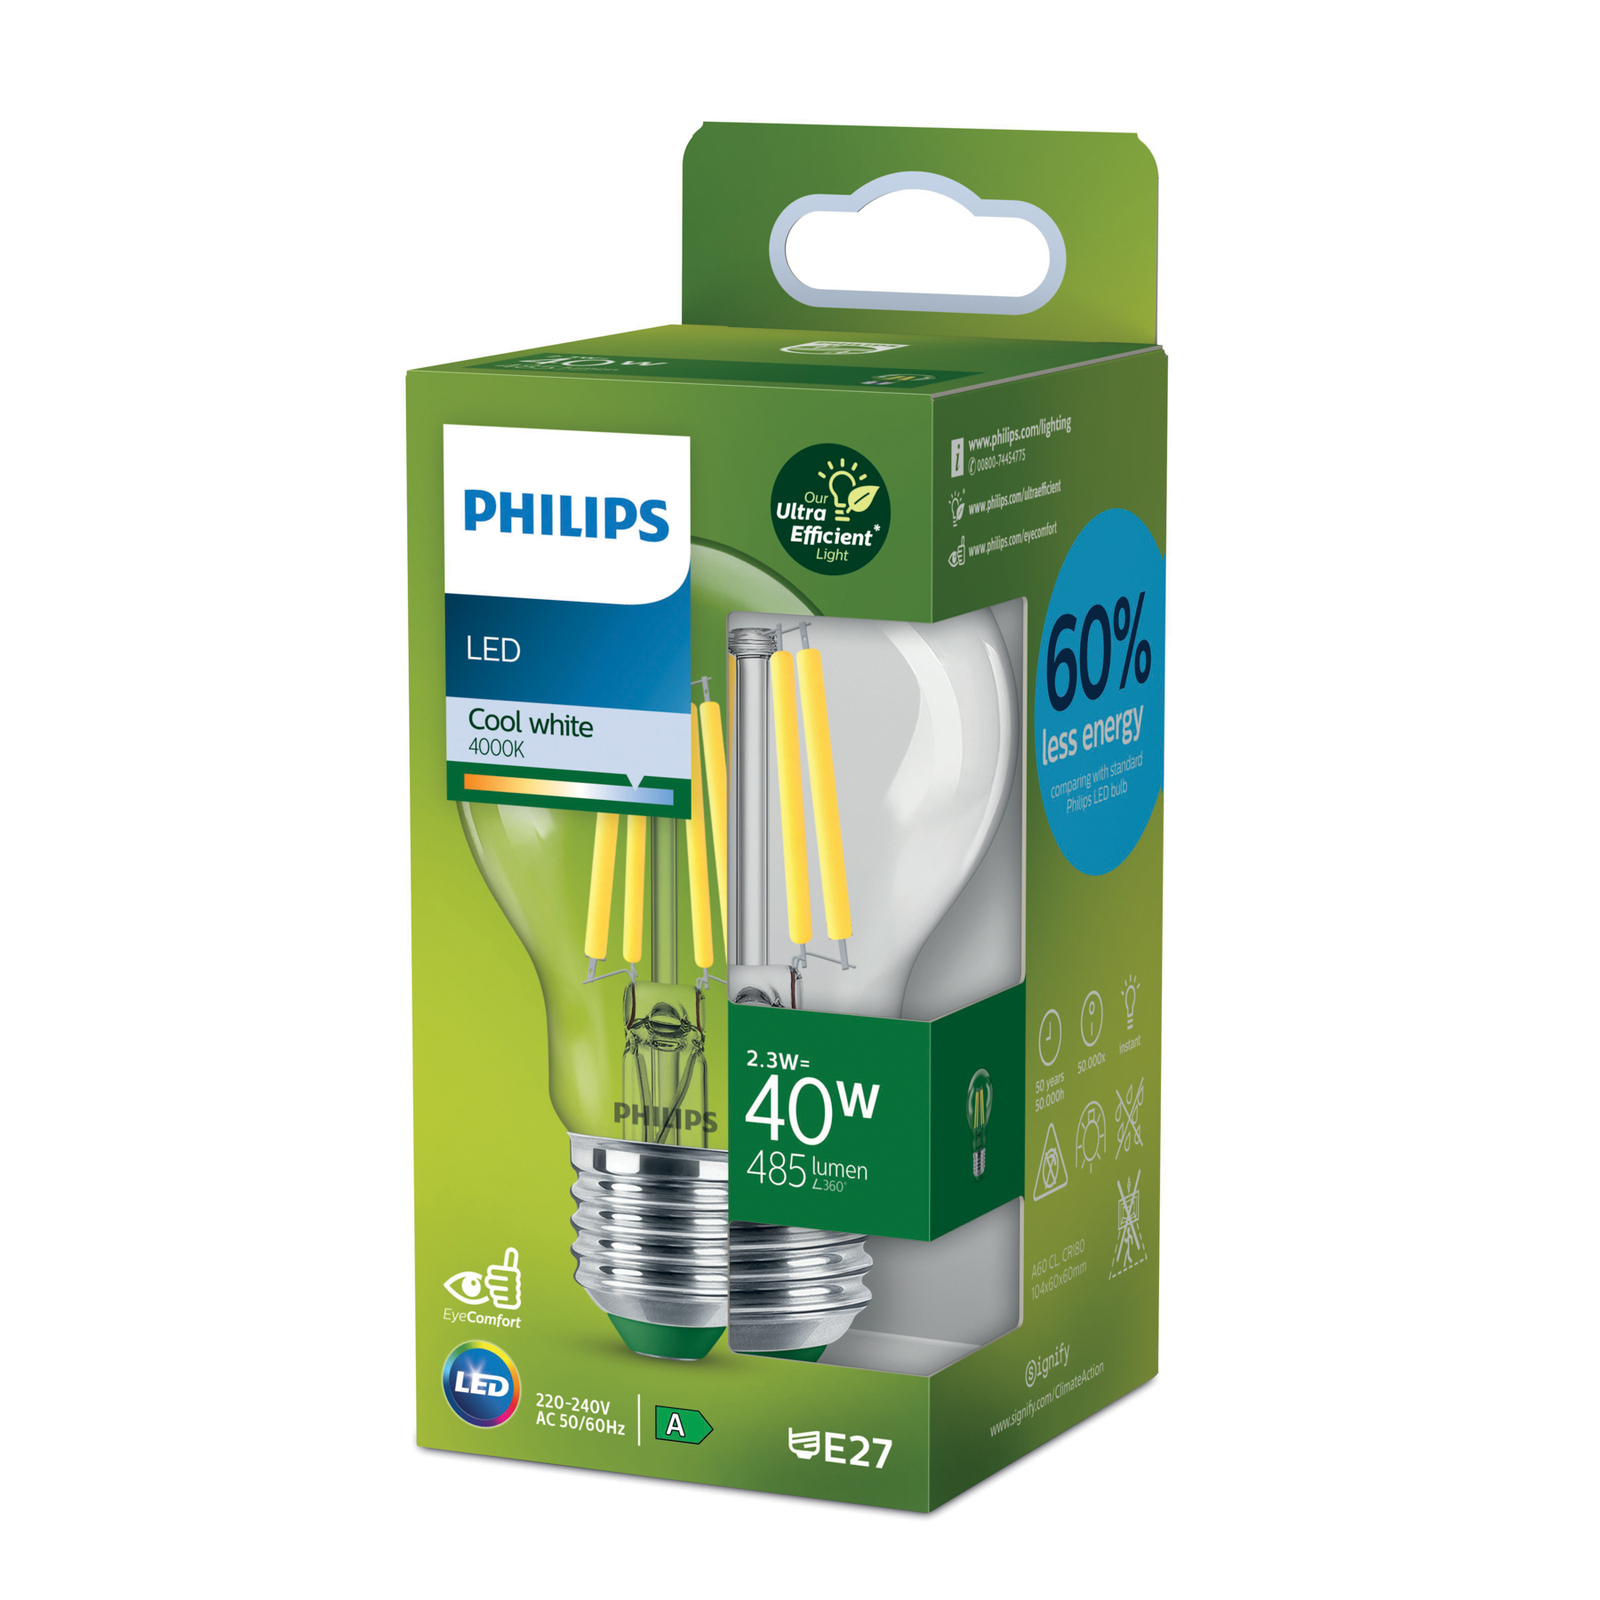 Philips E27 LED bulb A60 2.3W 485lm 4,000K clear